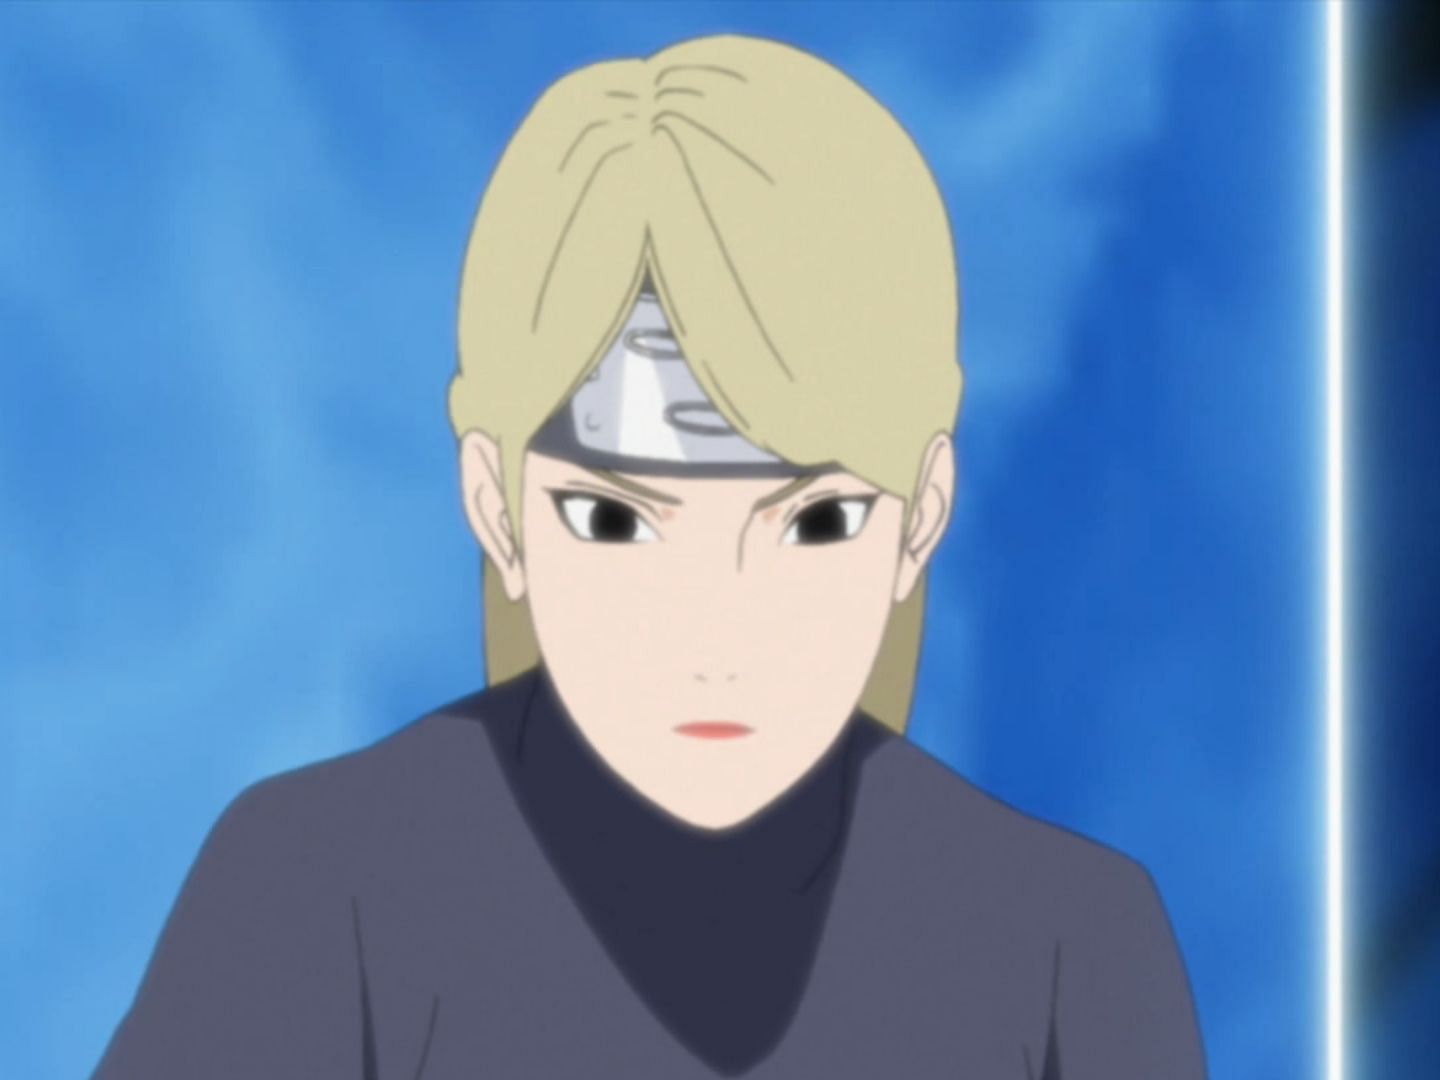 Yugito from the Naruto series (image via Pierrot)